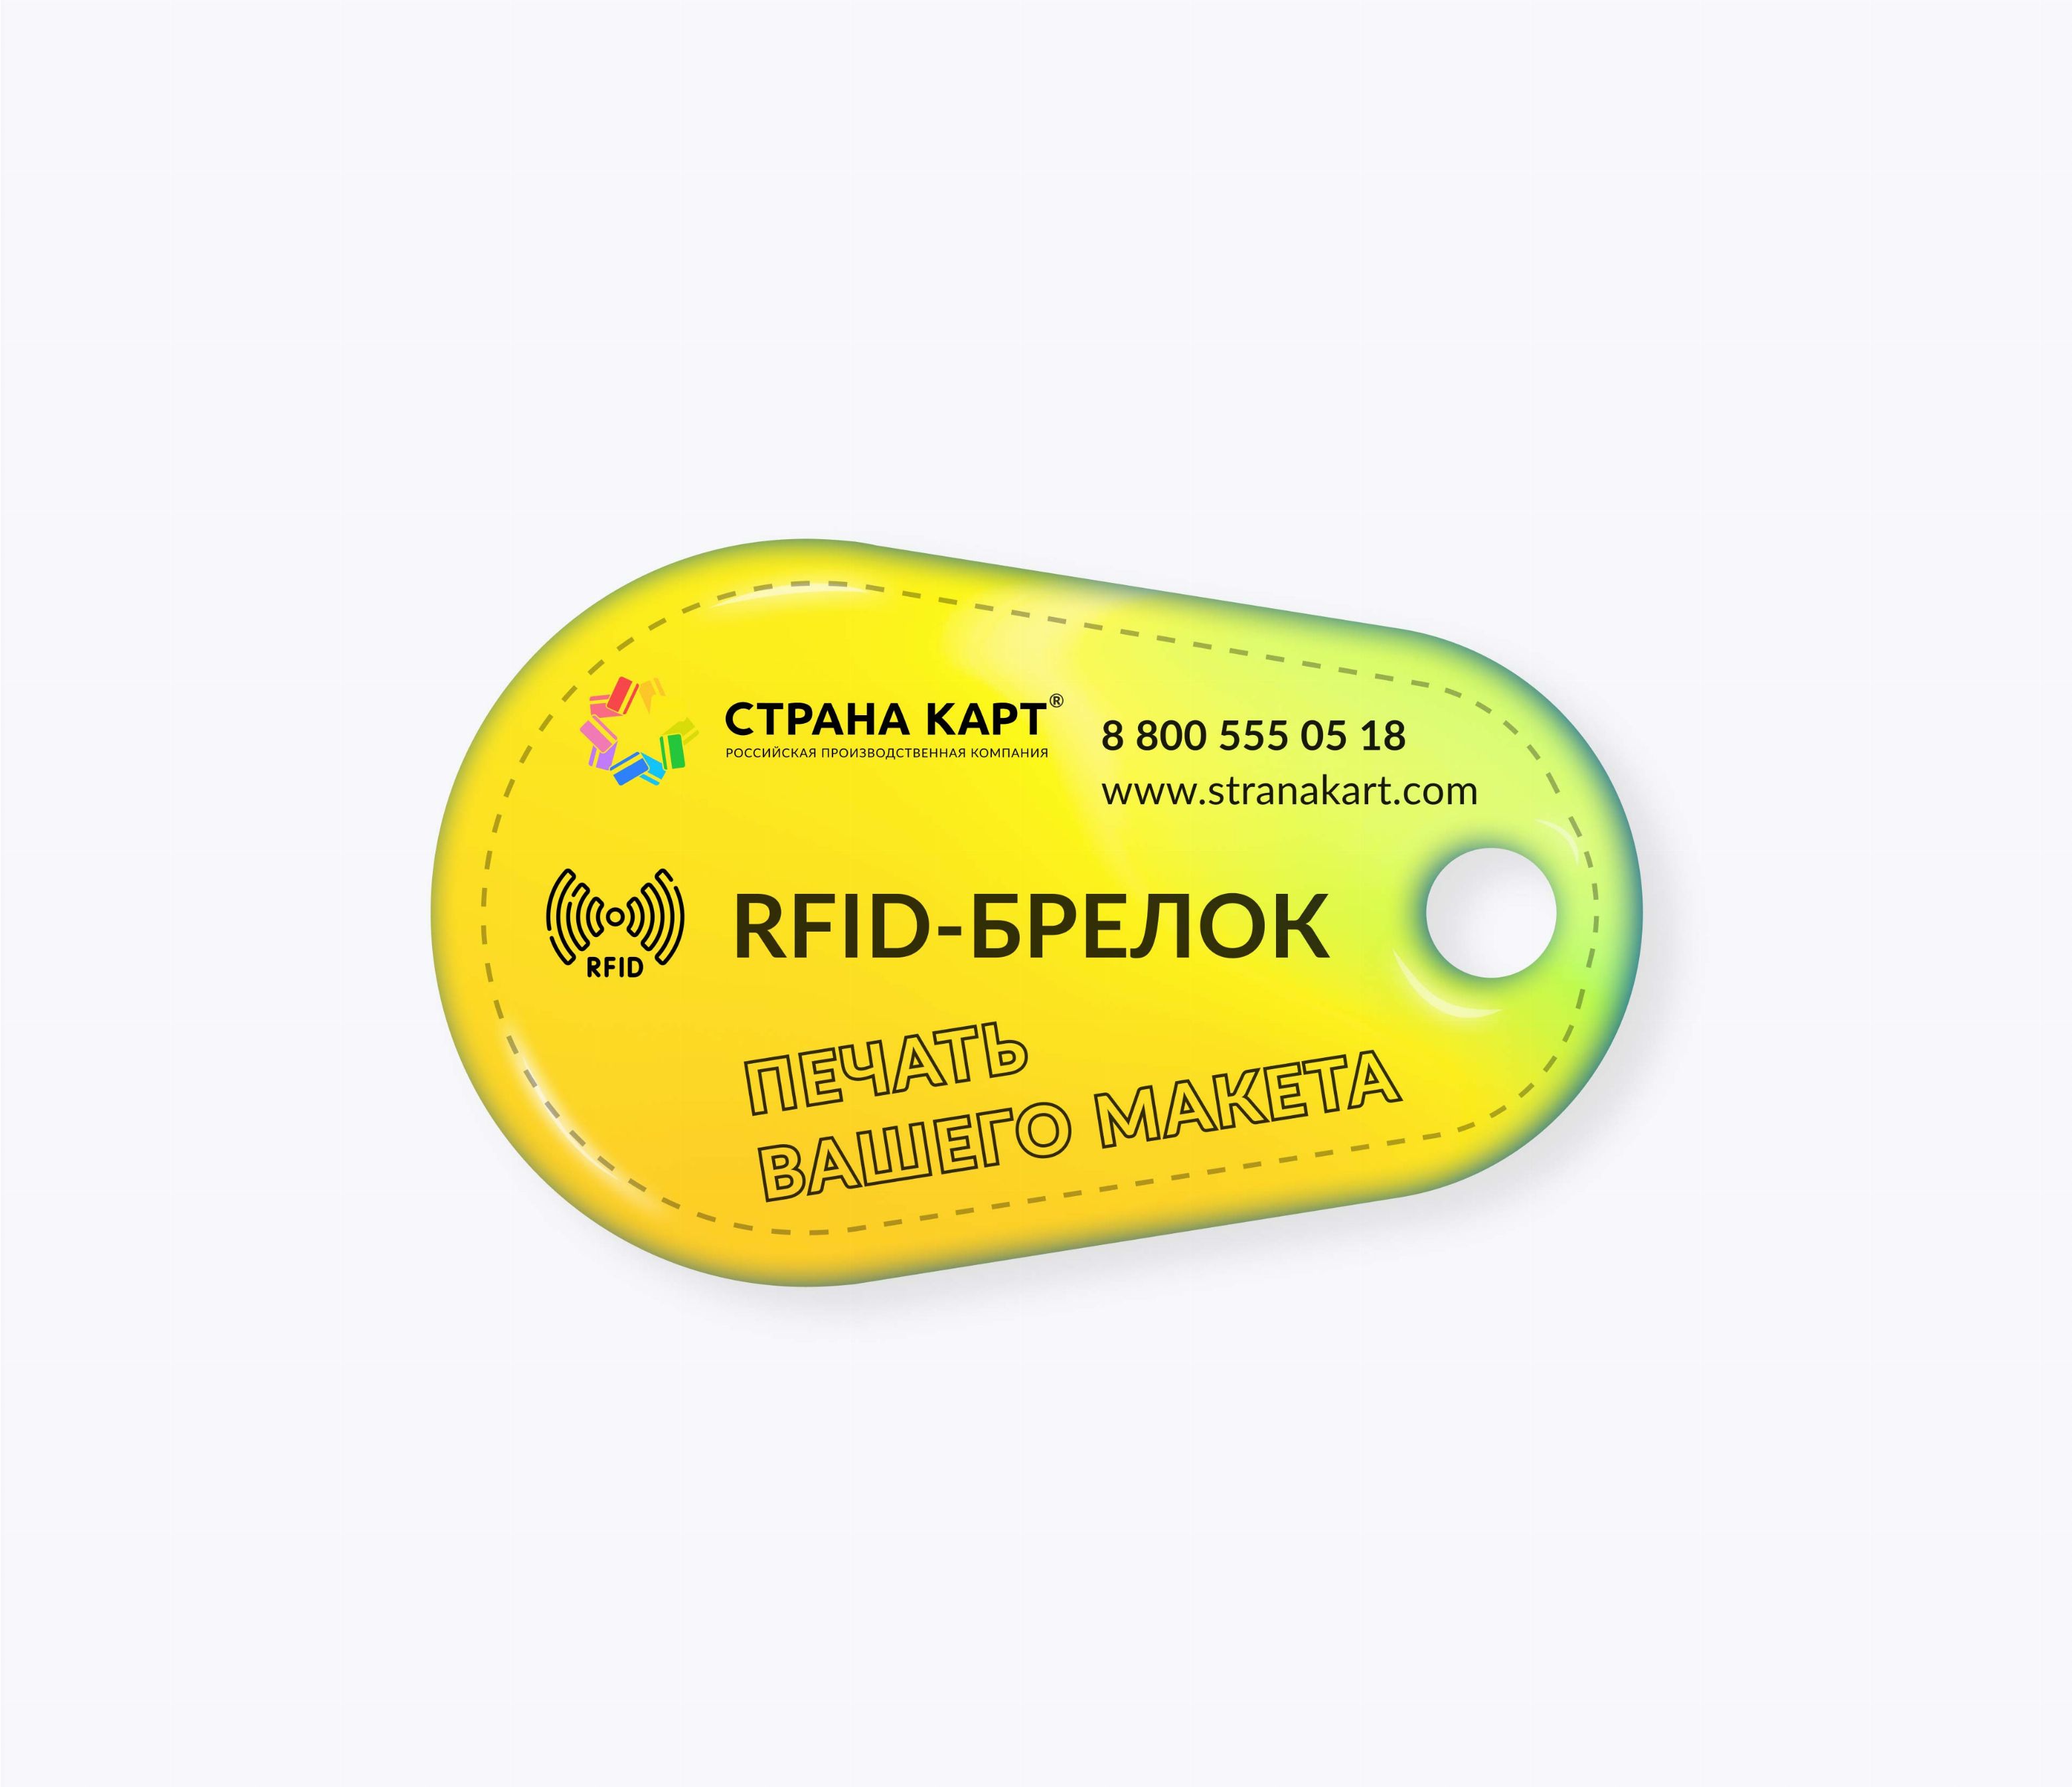 Каплевидные RFID-брелоки NEOKEY® с чипом  NXP MIFARE Ultralight C 7 byte UID RFID-брелоки NEOKEY® с чипом NXP MIFARE Ultralight C 7 byte UID и вашим логотипом